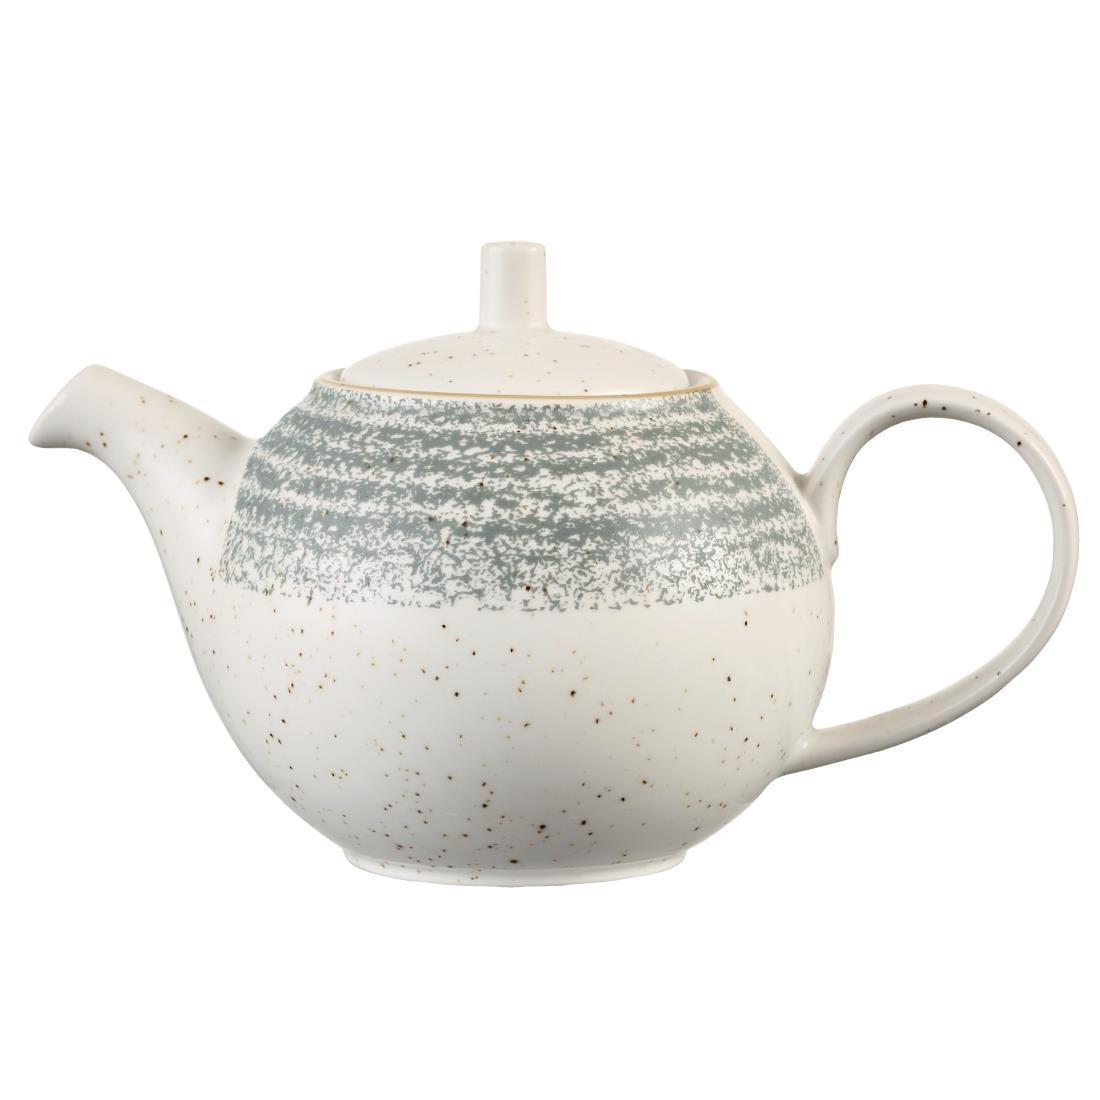 Churchill Studio Prints Homespun Stone Grey Teapot 426ml (Pack of 4) - DM427  - 1